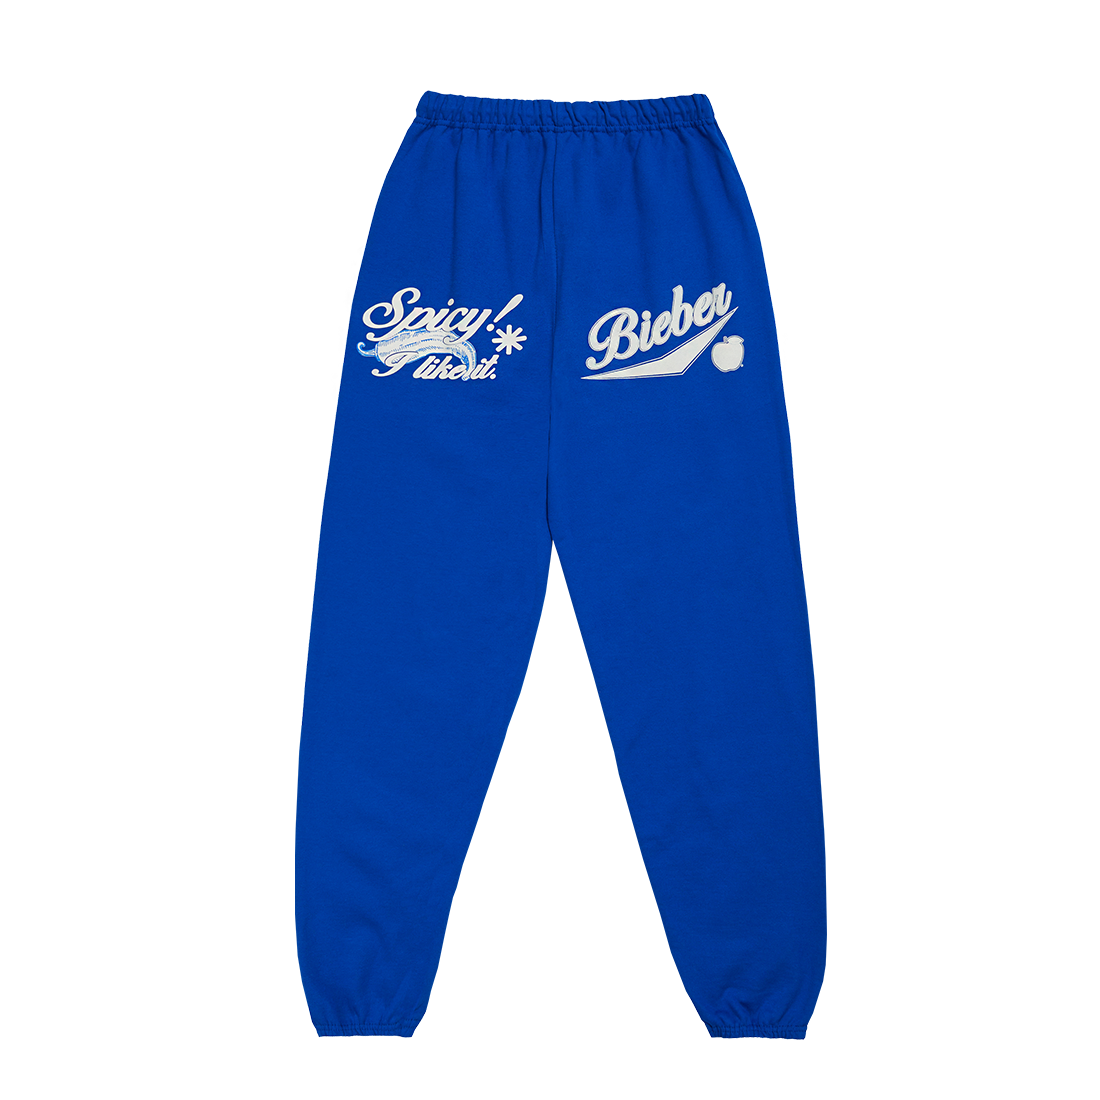 Pants & Jumpsuits, Blue Costco Sweatpants